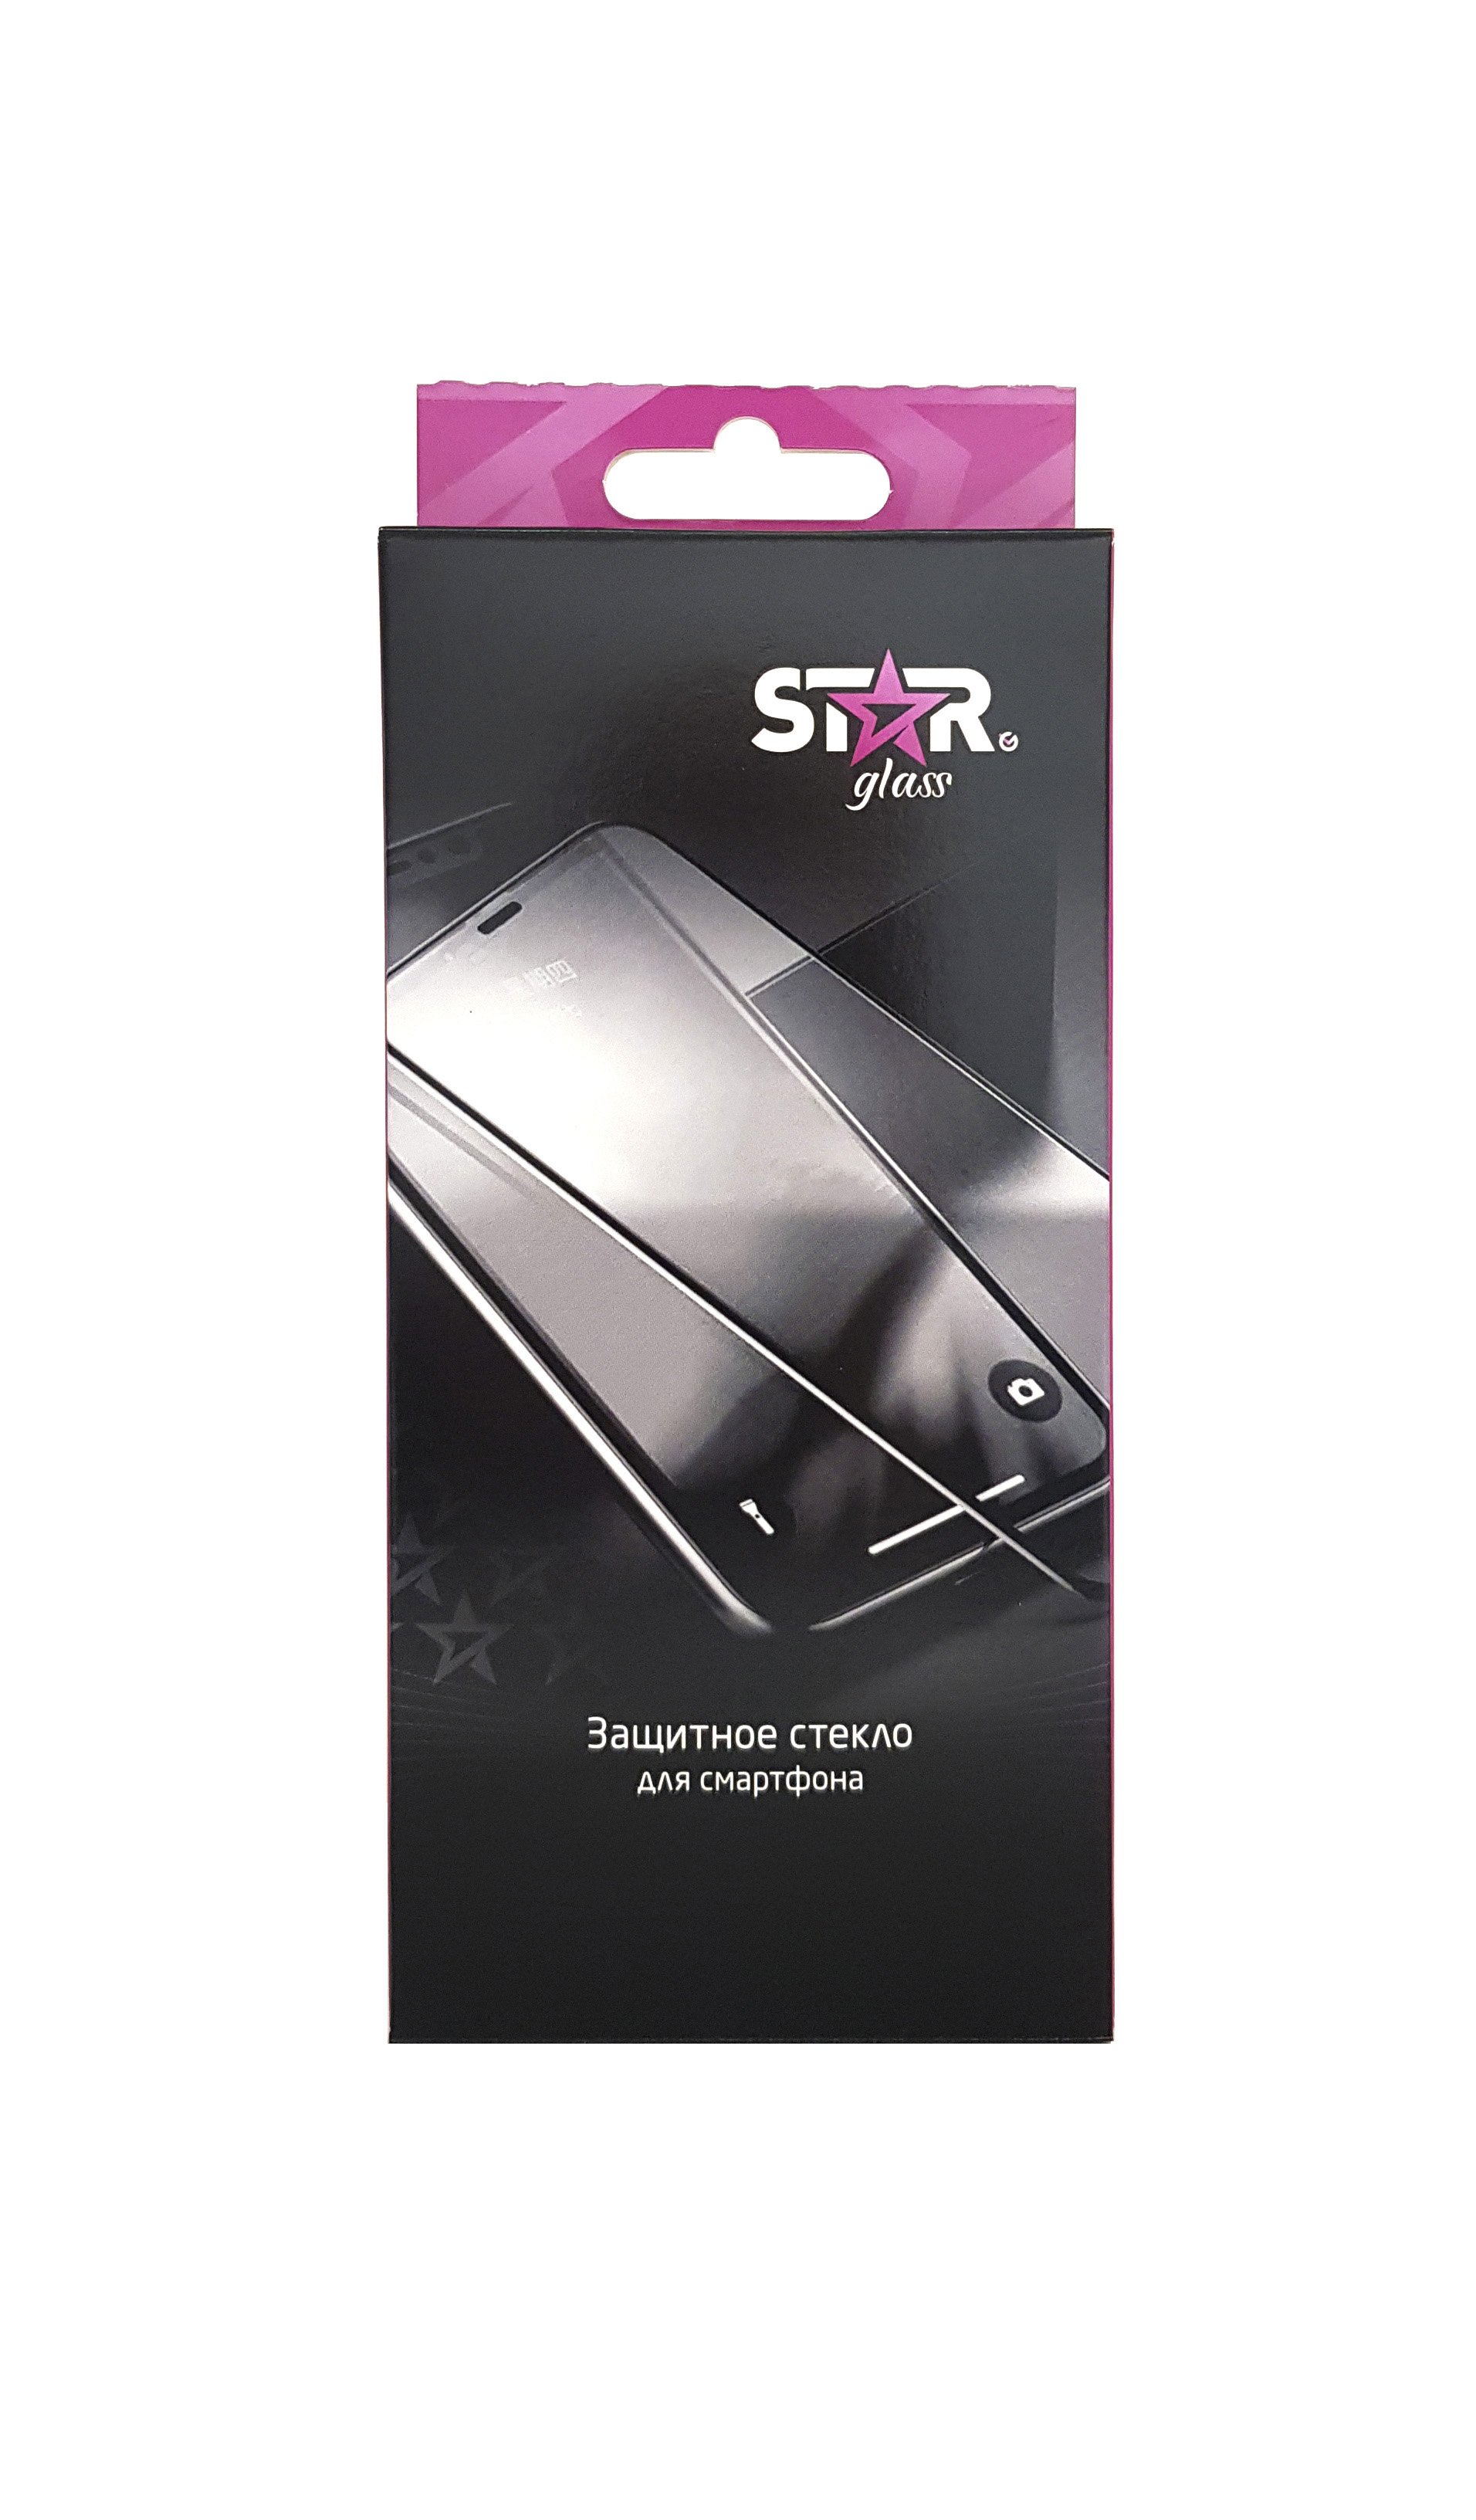 Защитное стекло Star glass для Samsung Galaxy A30 Black